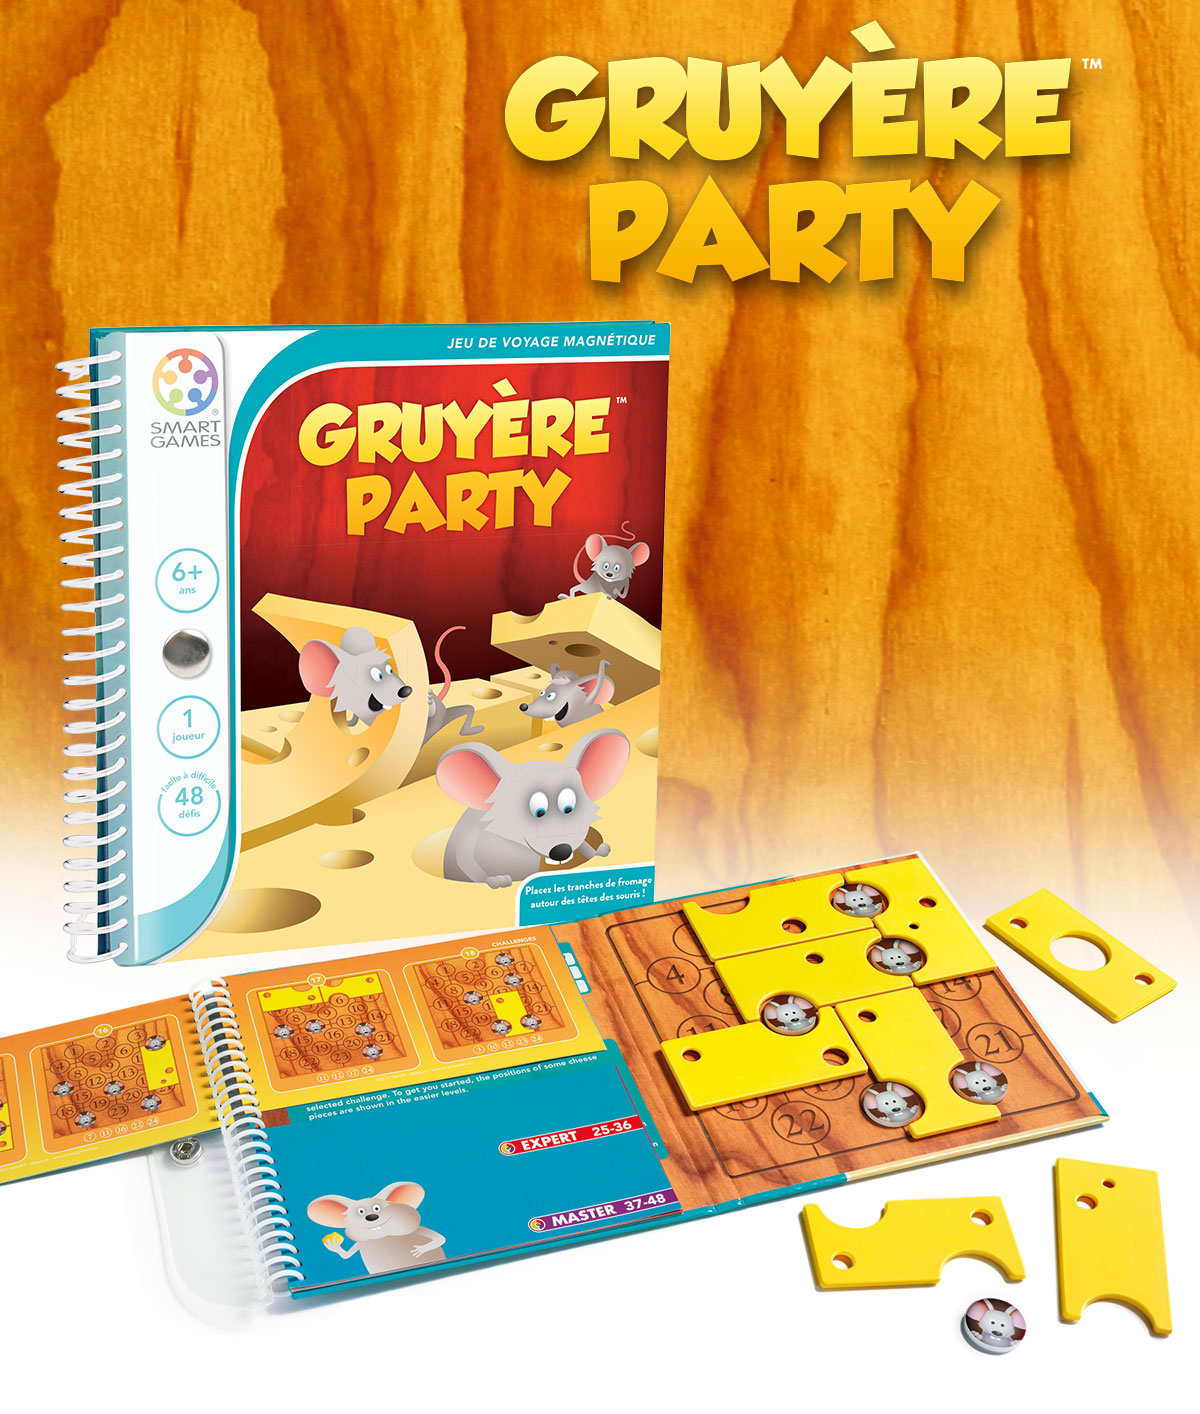 Gruyere Party – Smartgames